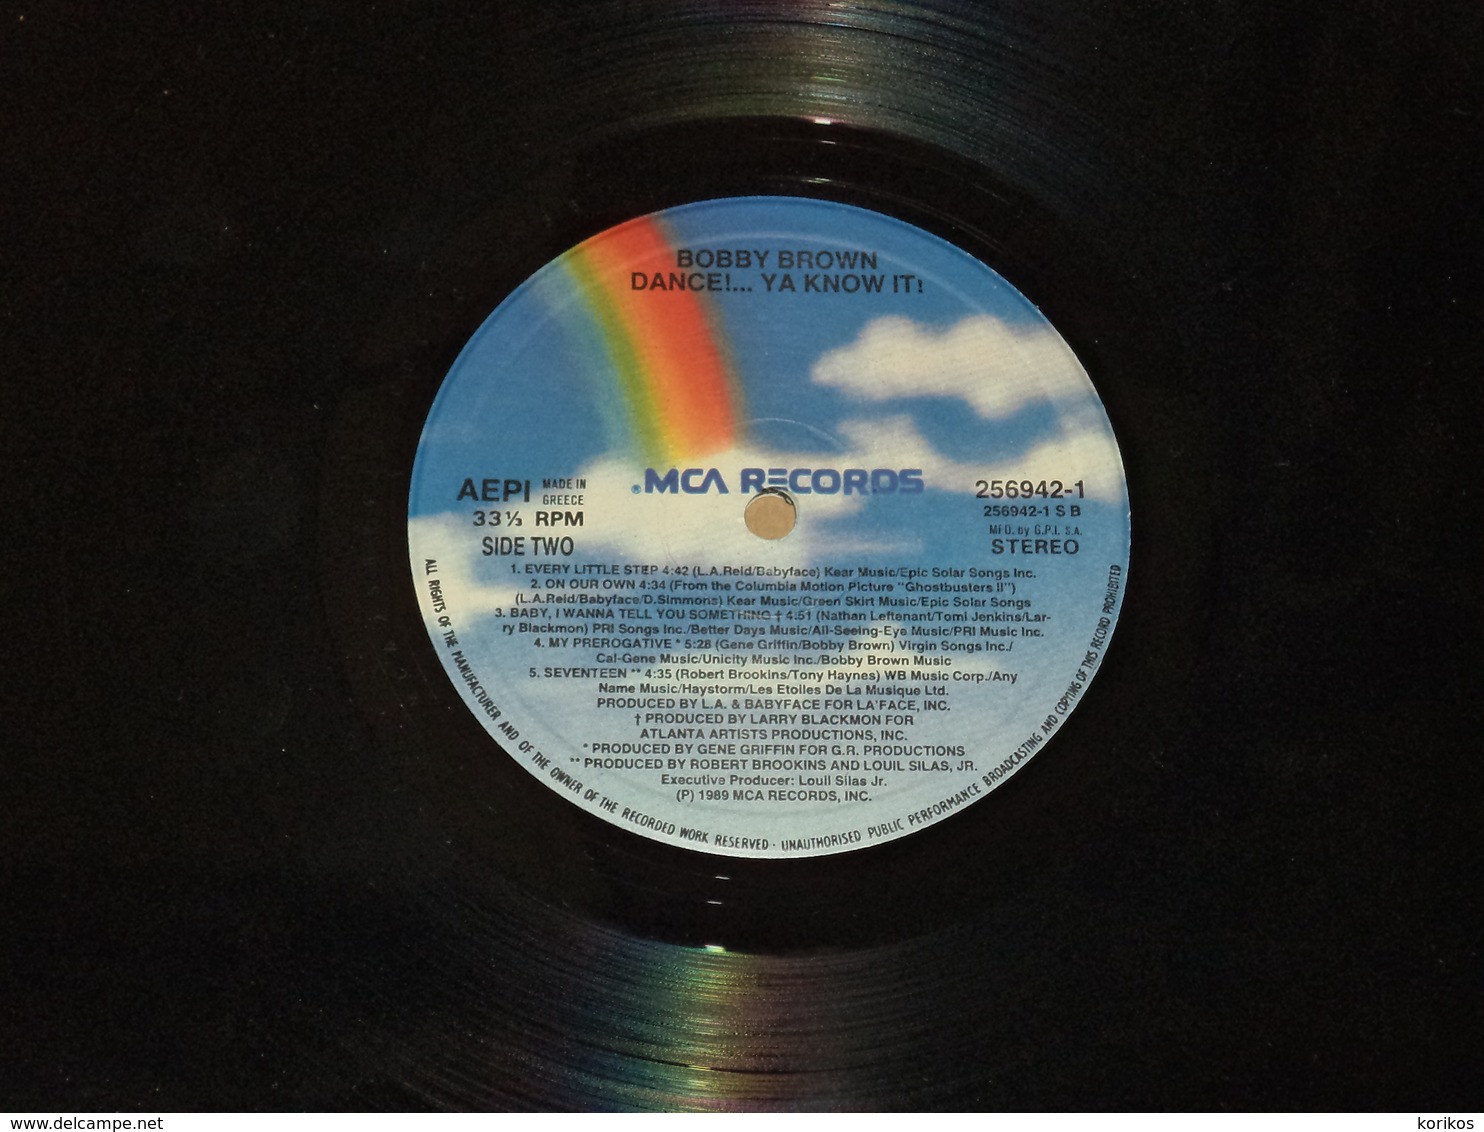 BOBBY BROWN - DANCE YA KNOW IT – MCA RECORDS – 256942-1 - VINYL – 1989 – GREEK EDITION